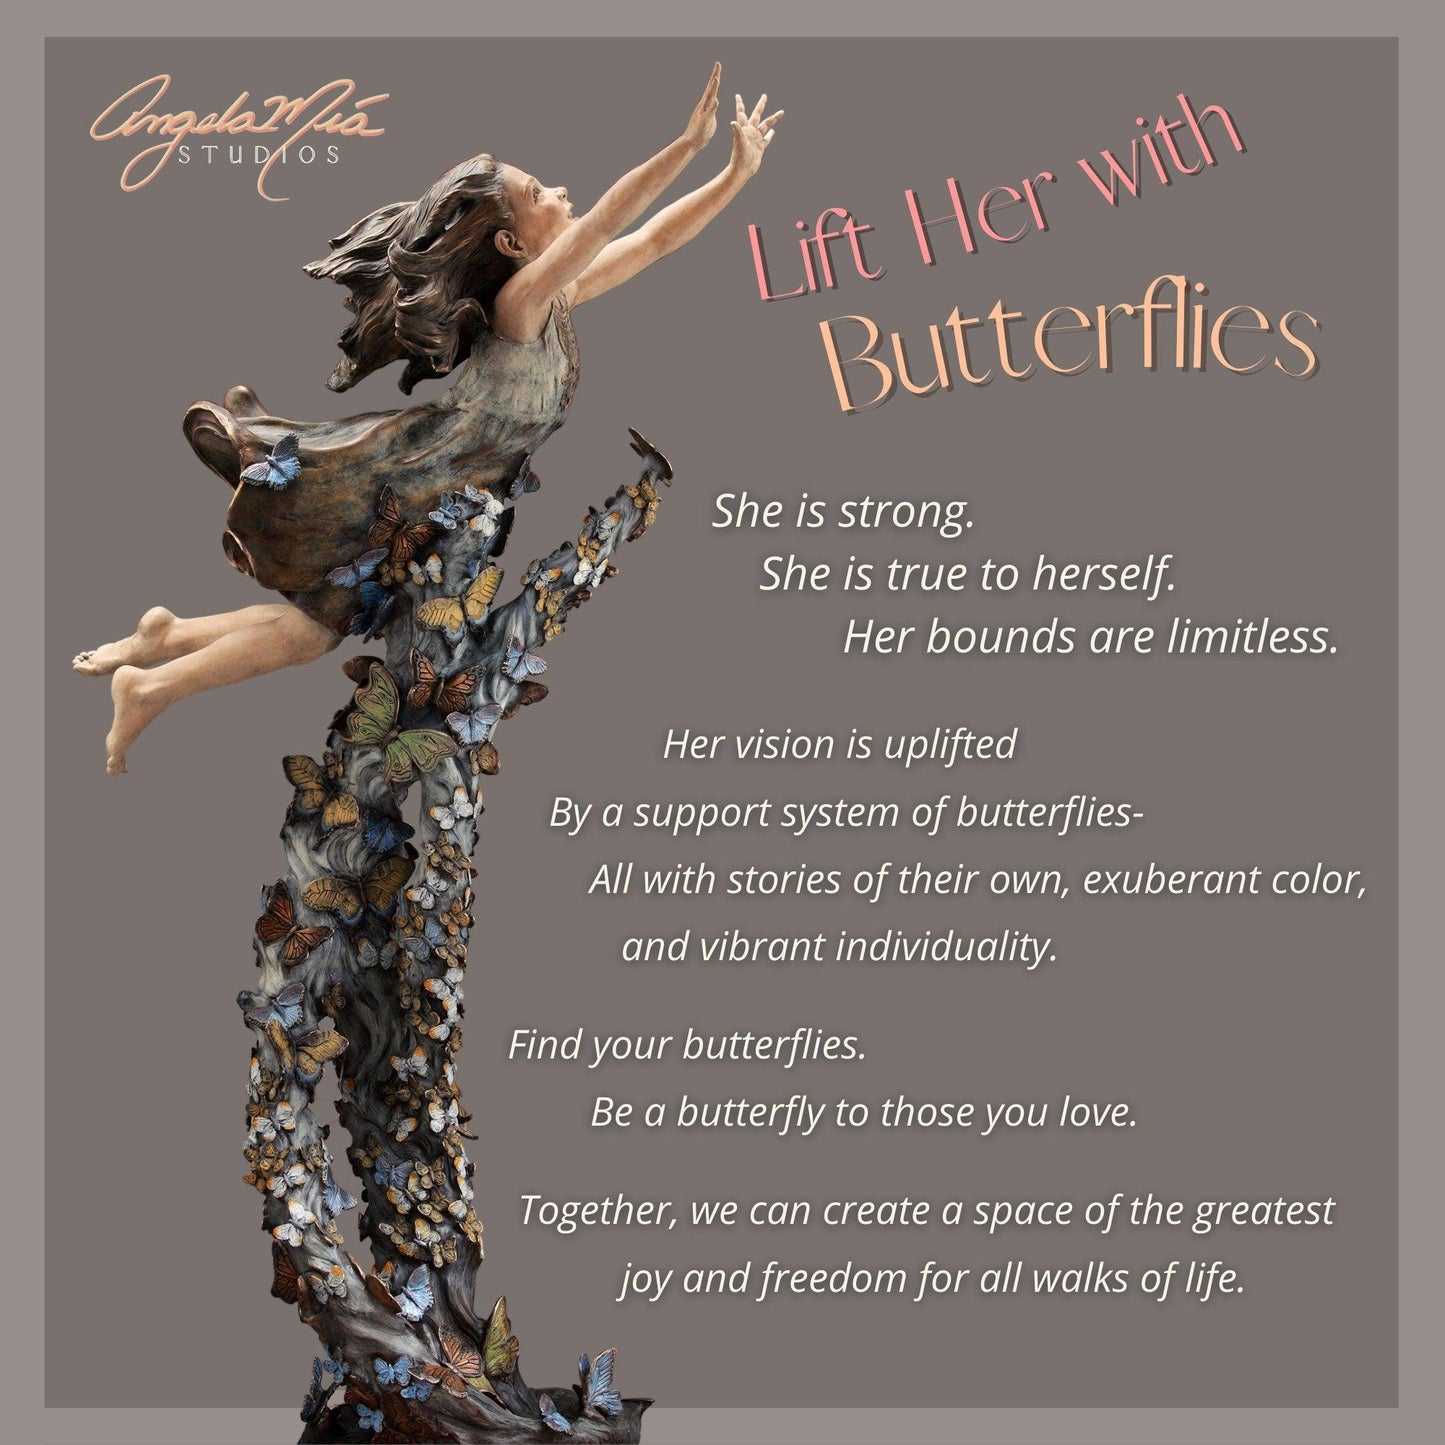 "Lift Her with Butterflies" Bracelet - White Rhodium - Angela Mia Jewelry